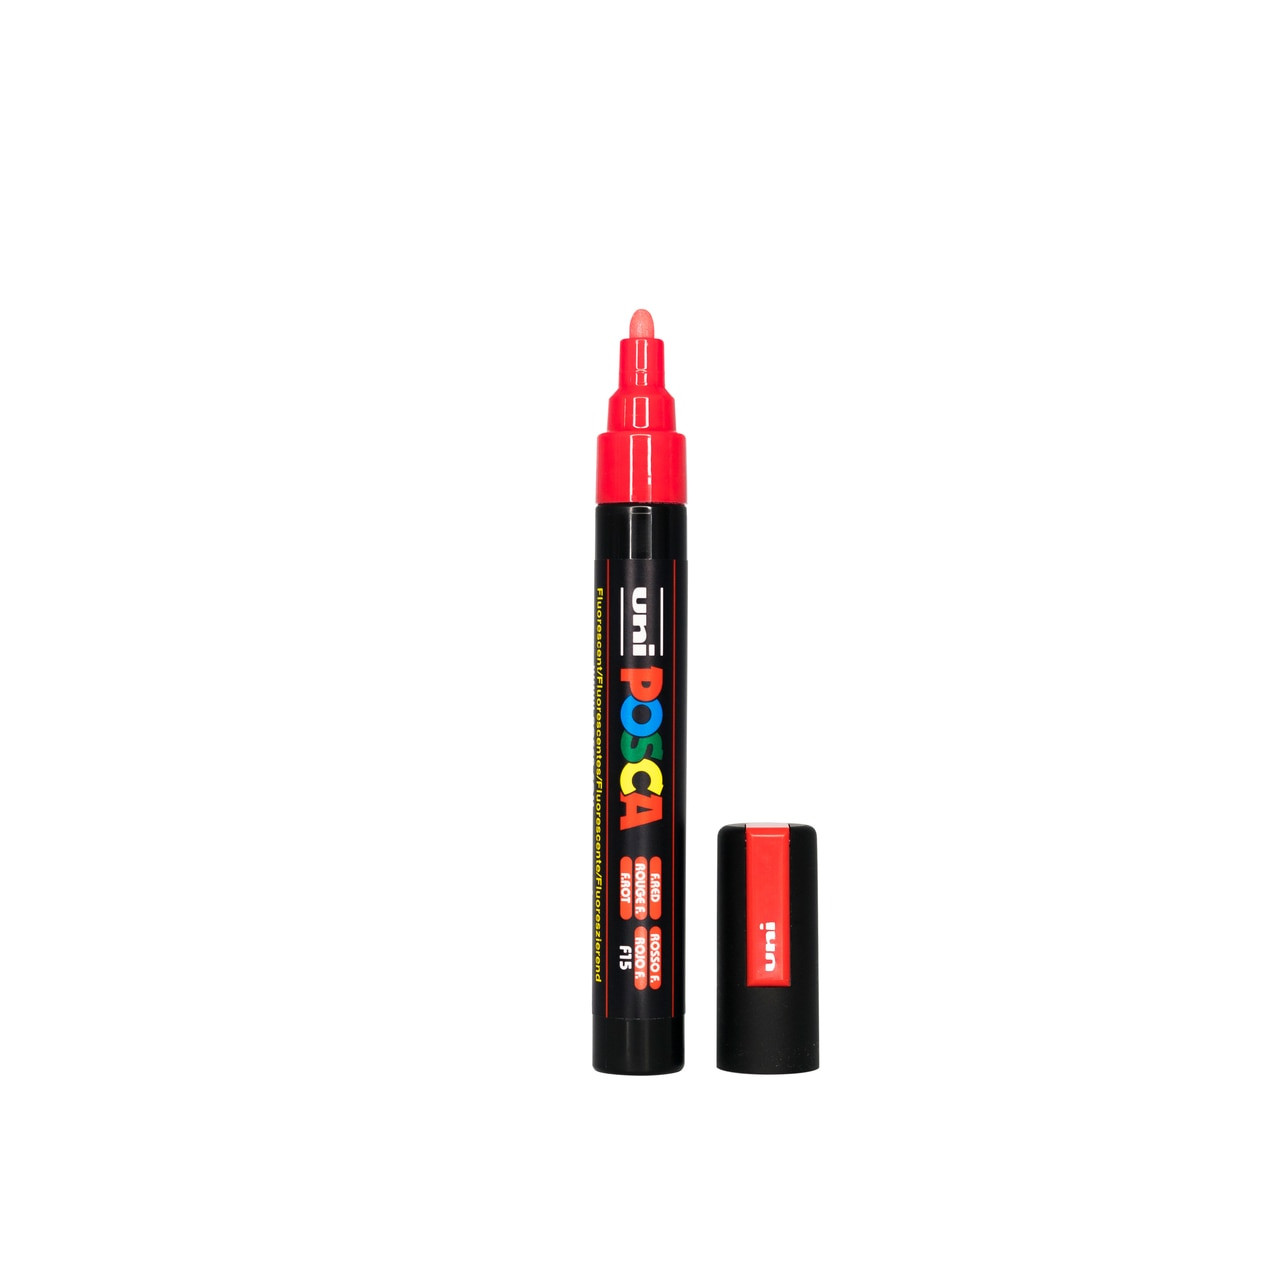 Uni Posca PC-5M Pastel Colours 8 Pack Ink Marker 1.8-2.5mm Multi-use Artist  Bundle Gift Set 